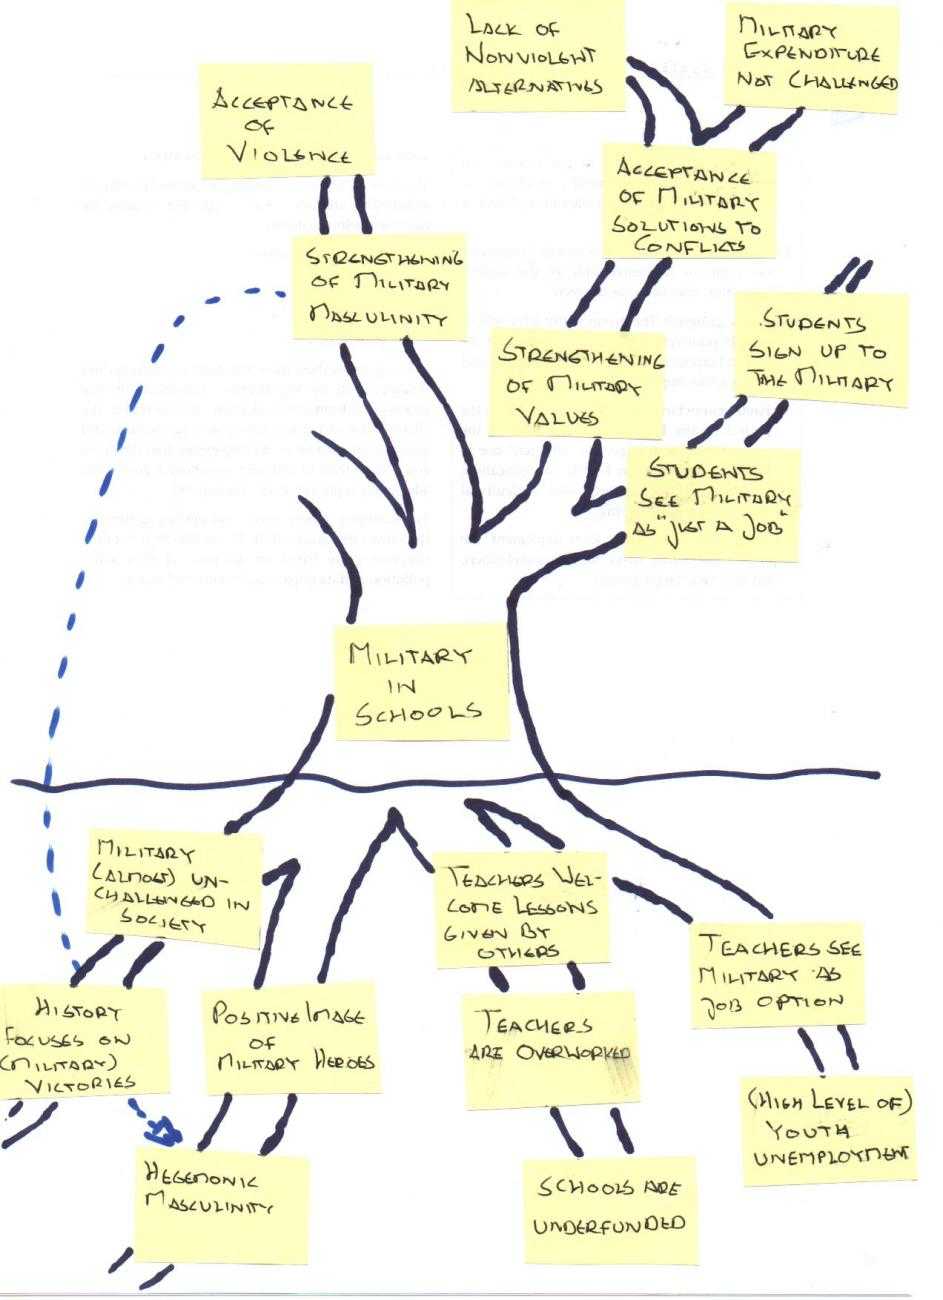 The full problem tree diagram